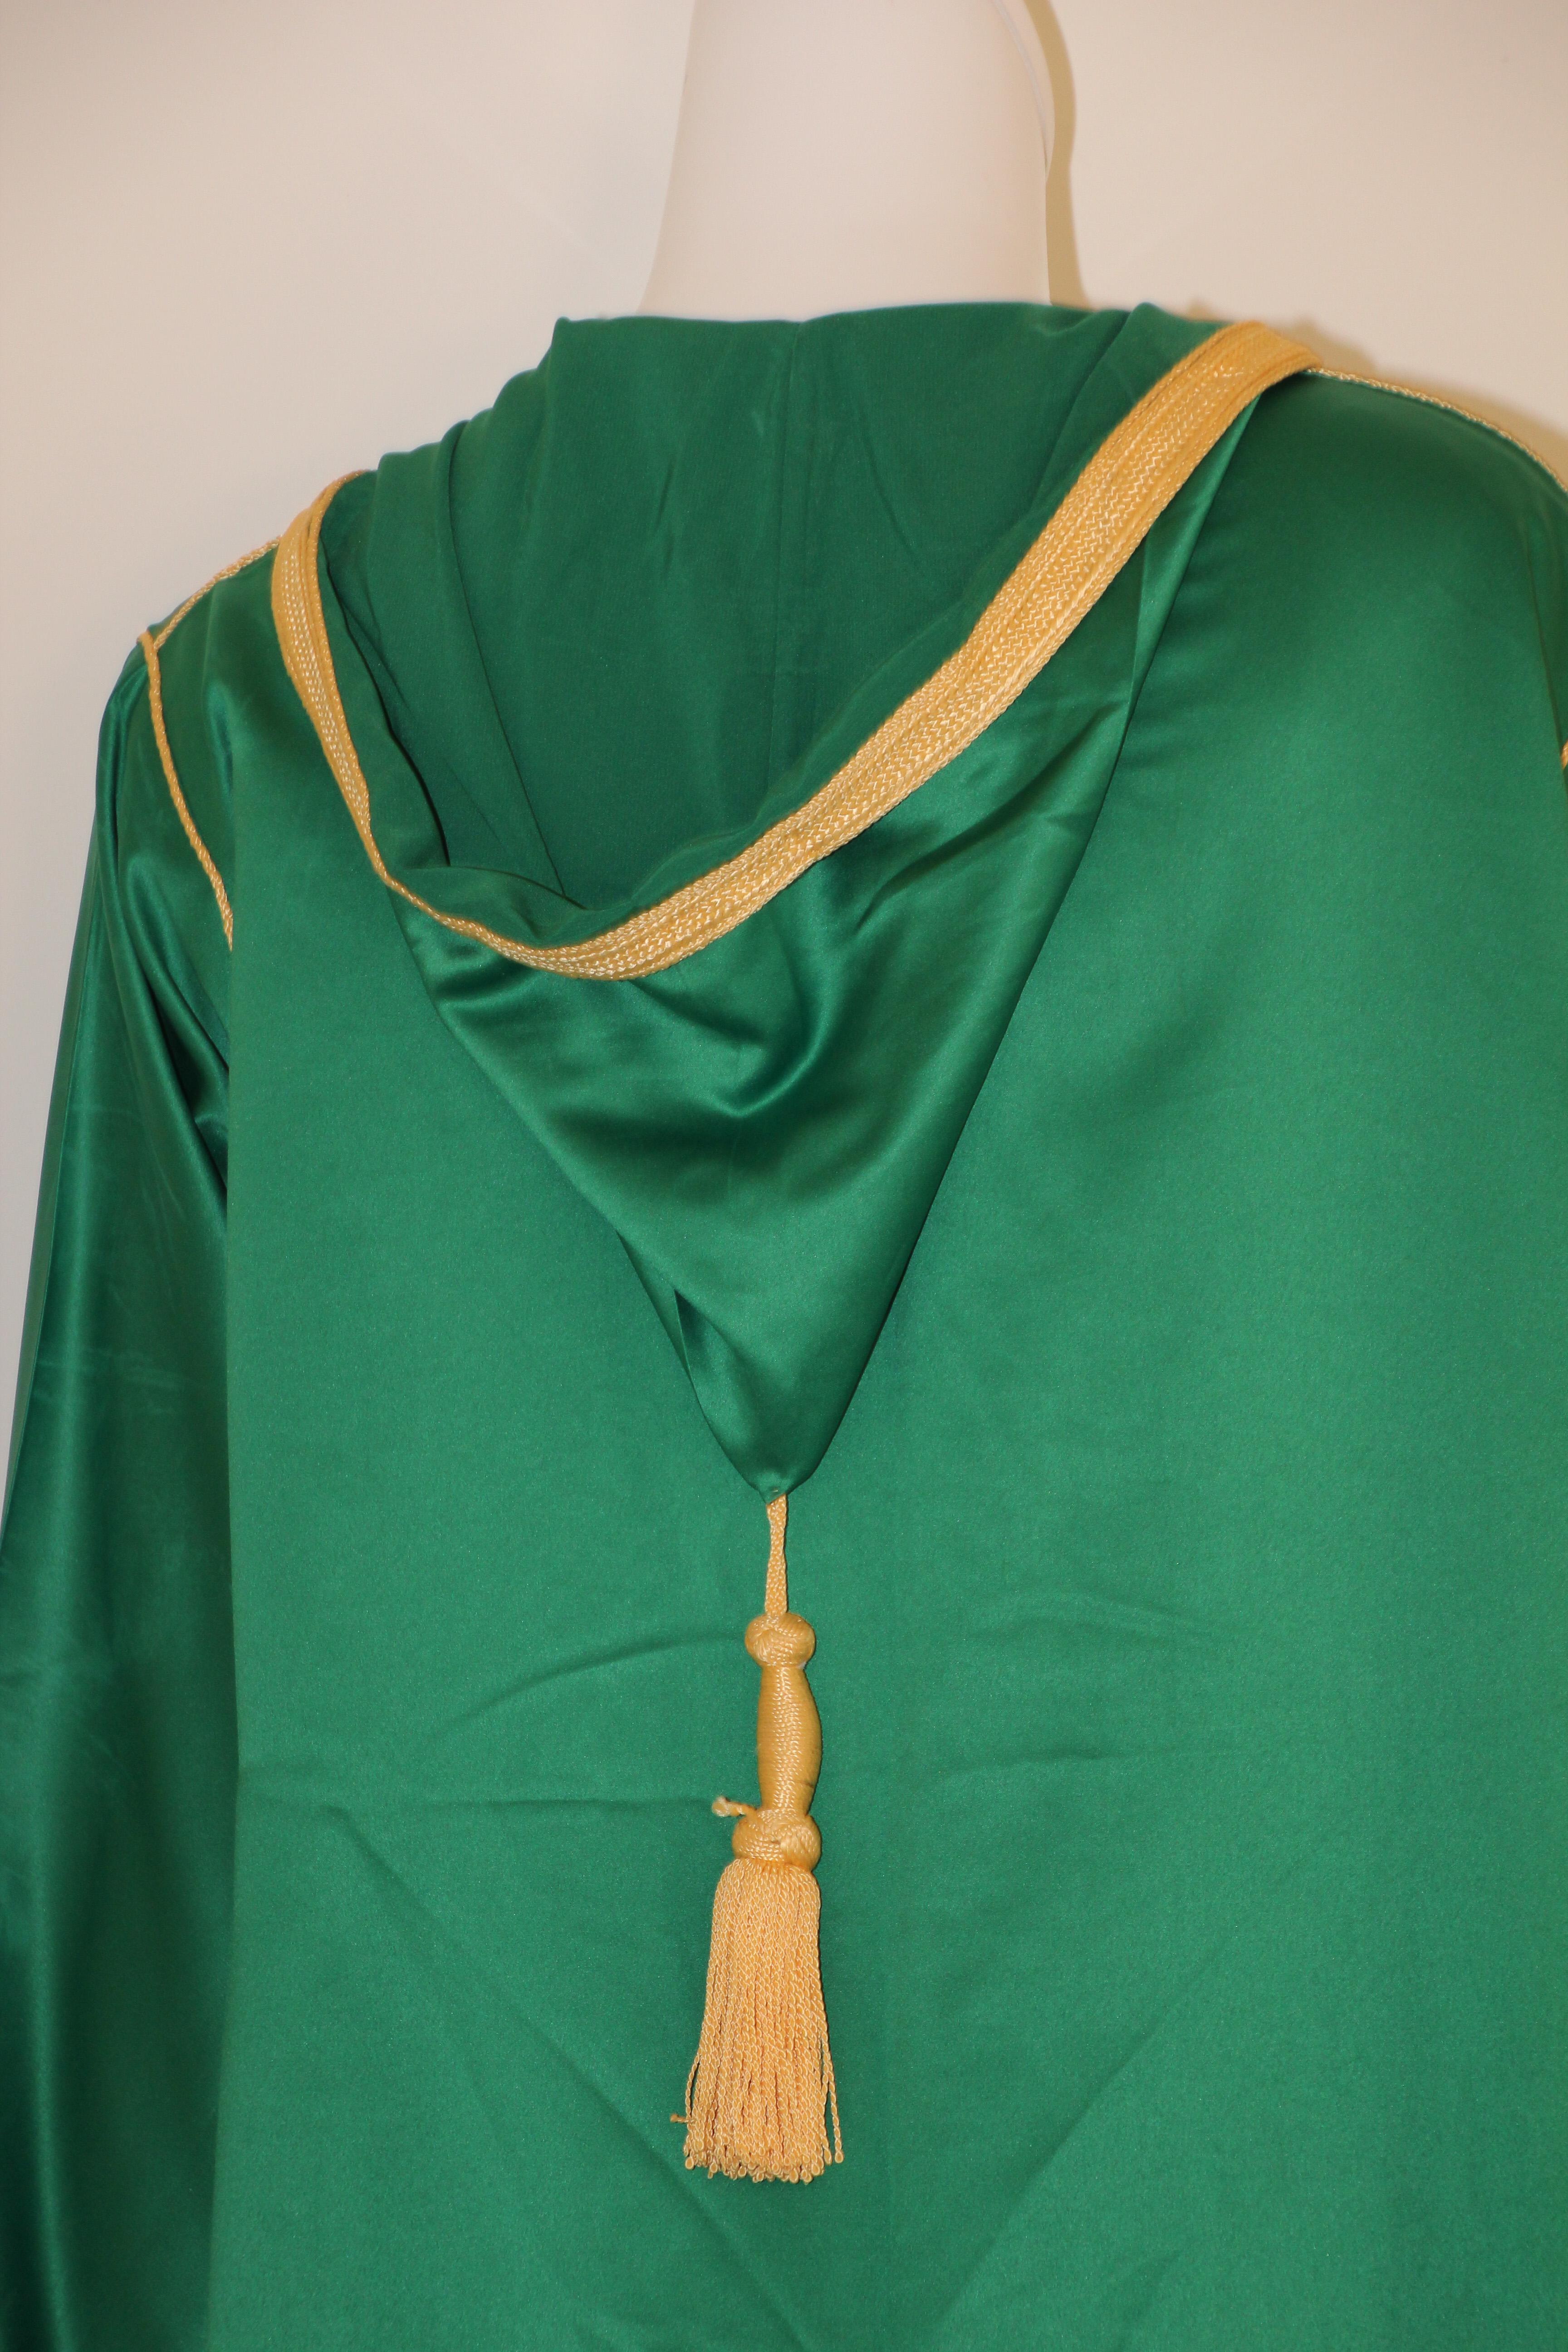 Caftan marocain à capuche Djellabah vert émeraude avec capuche en vente 7